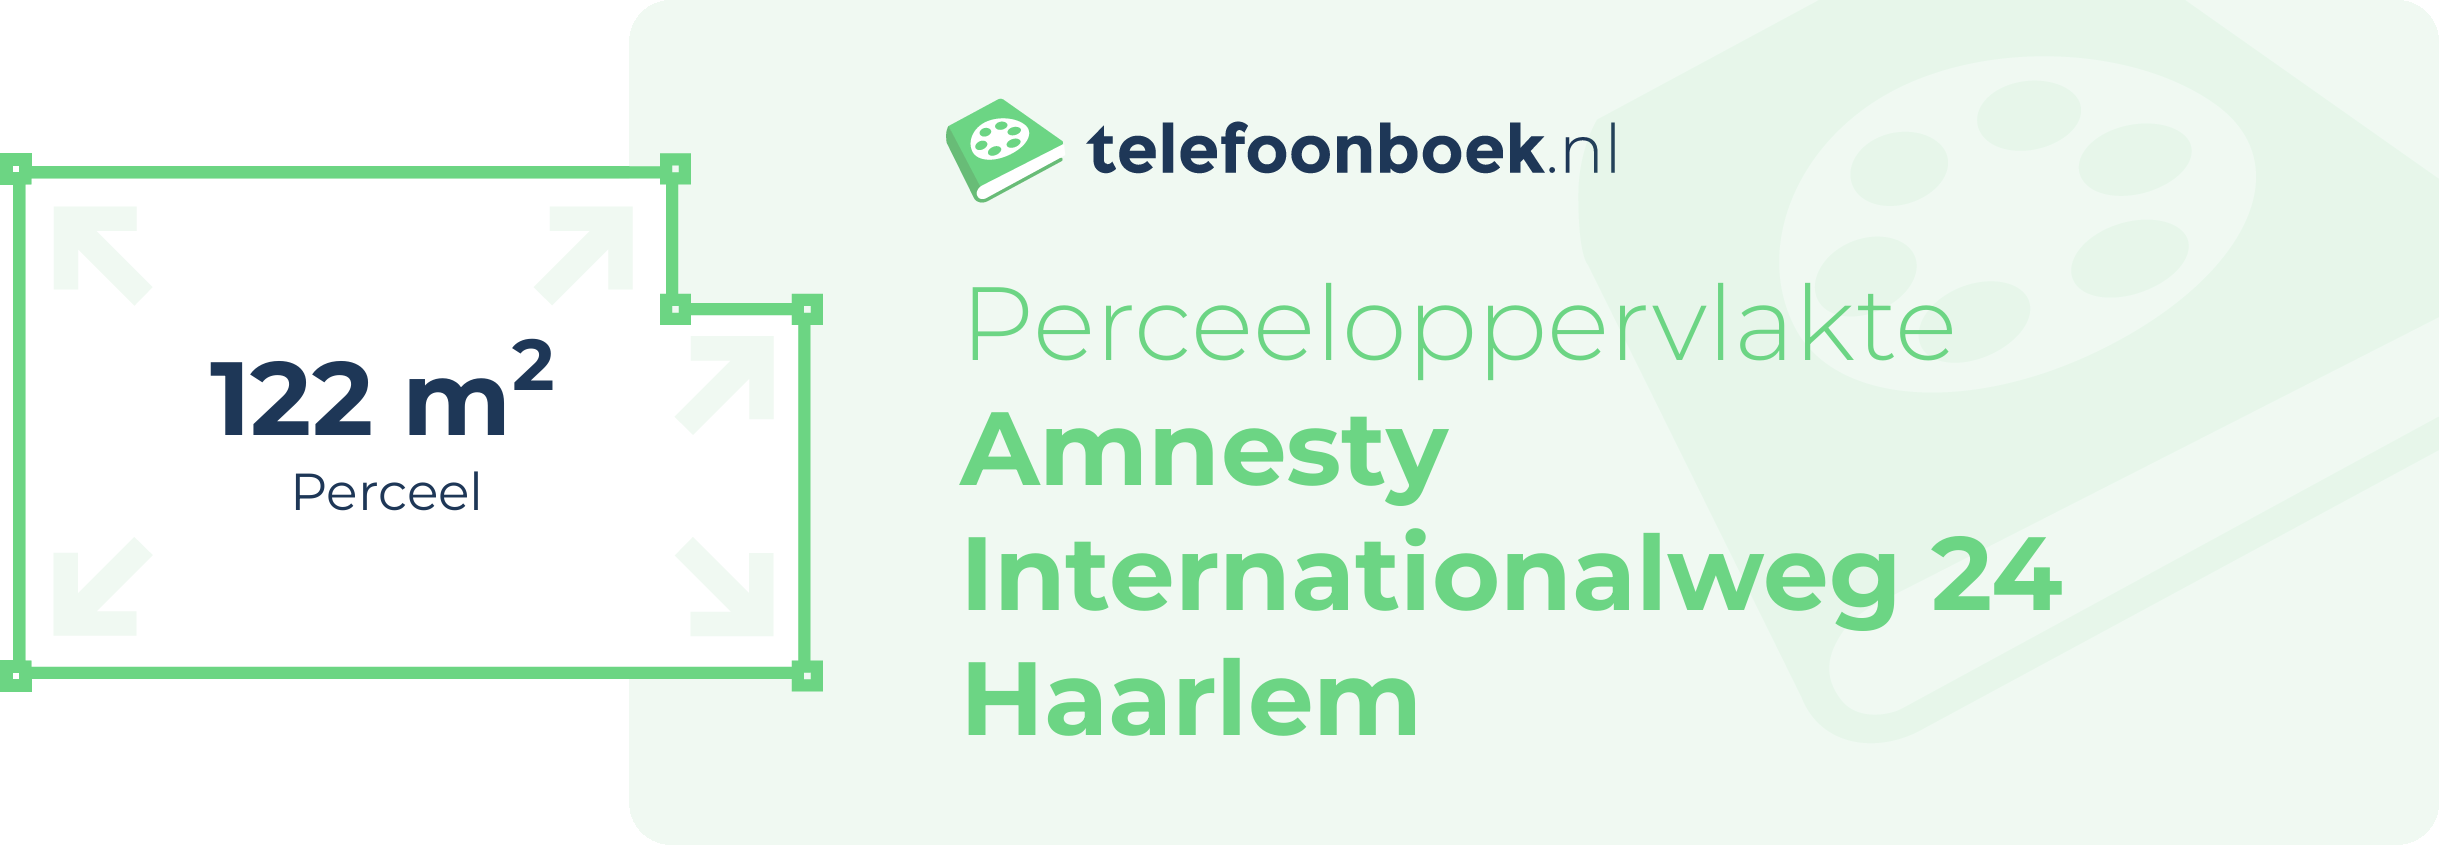 Perceeloppervlakte Amnesty Internationalweg 24 Haarlem